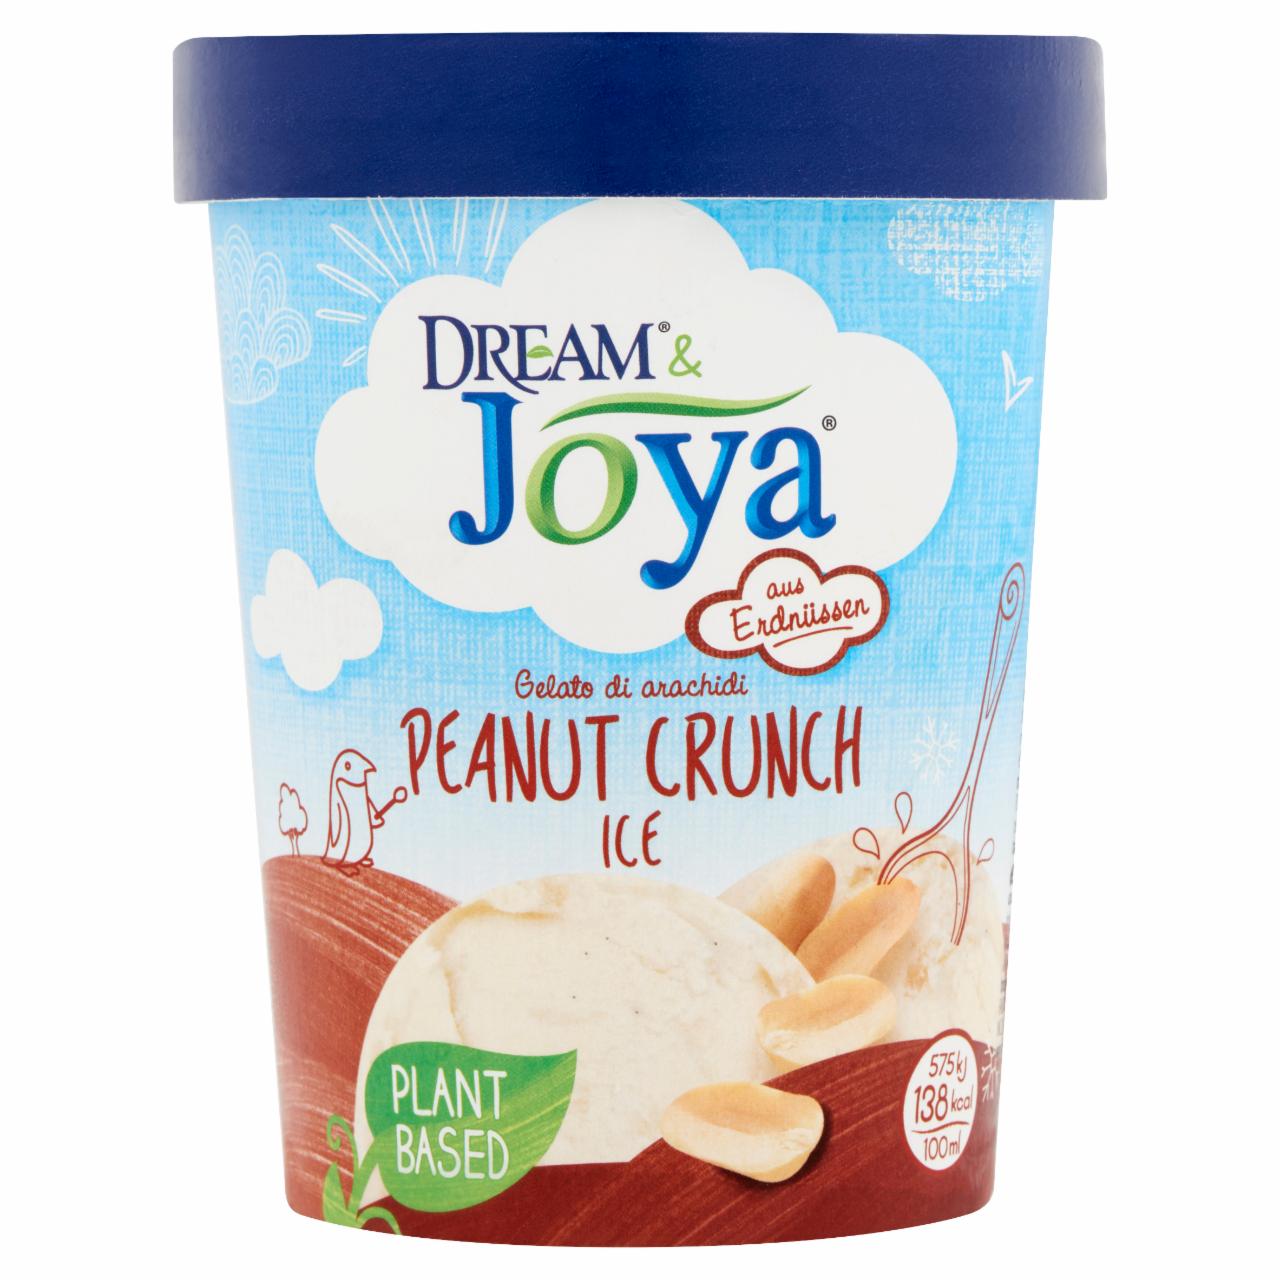 Fotografie - Peanut crunch ice Dream & Joya